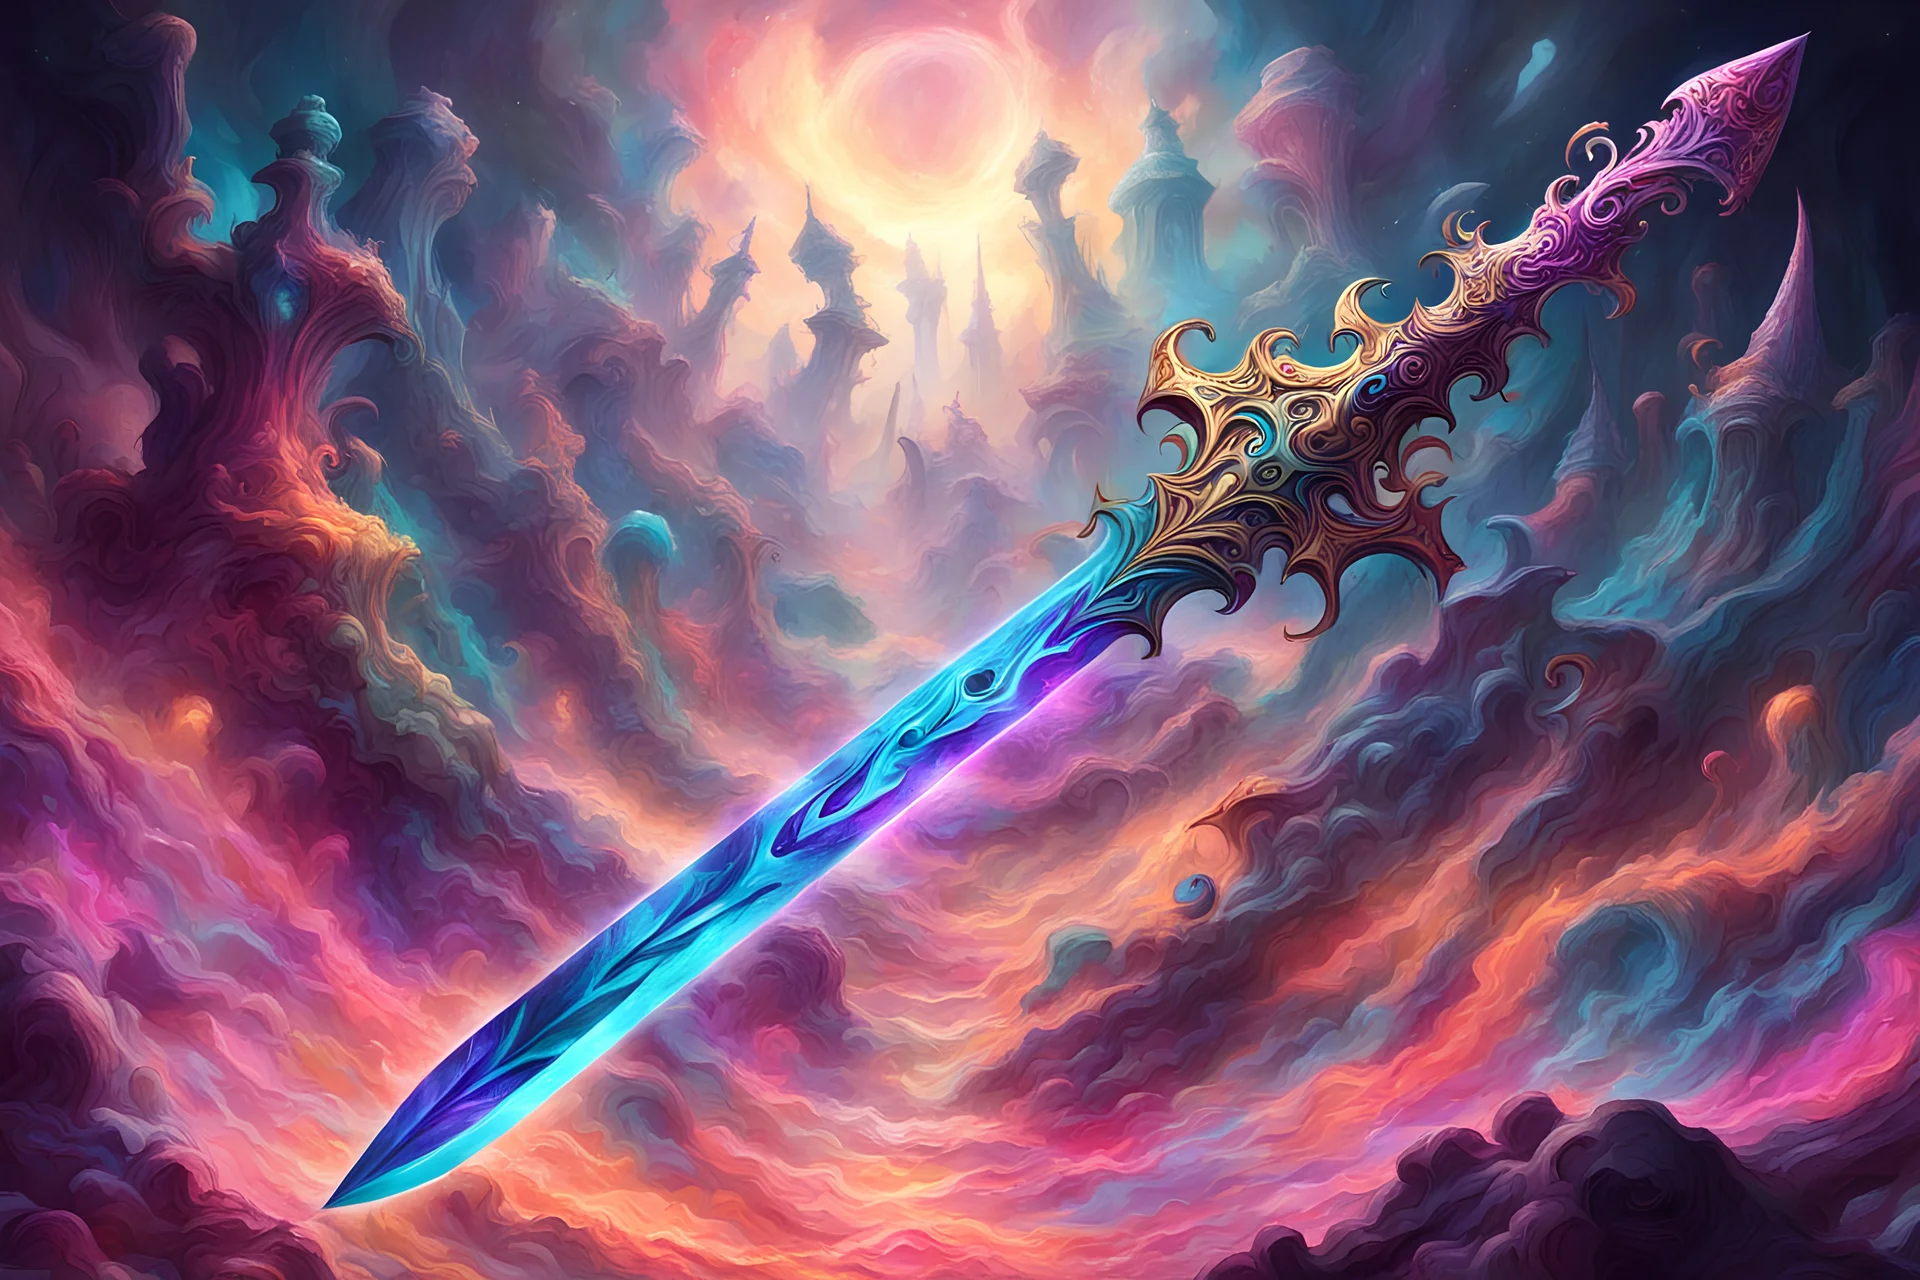 crazy acid trip fantasy weapon sword full